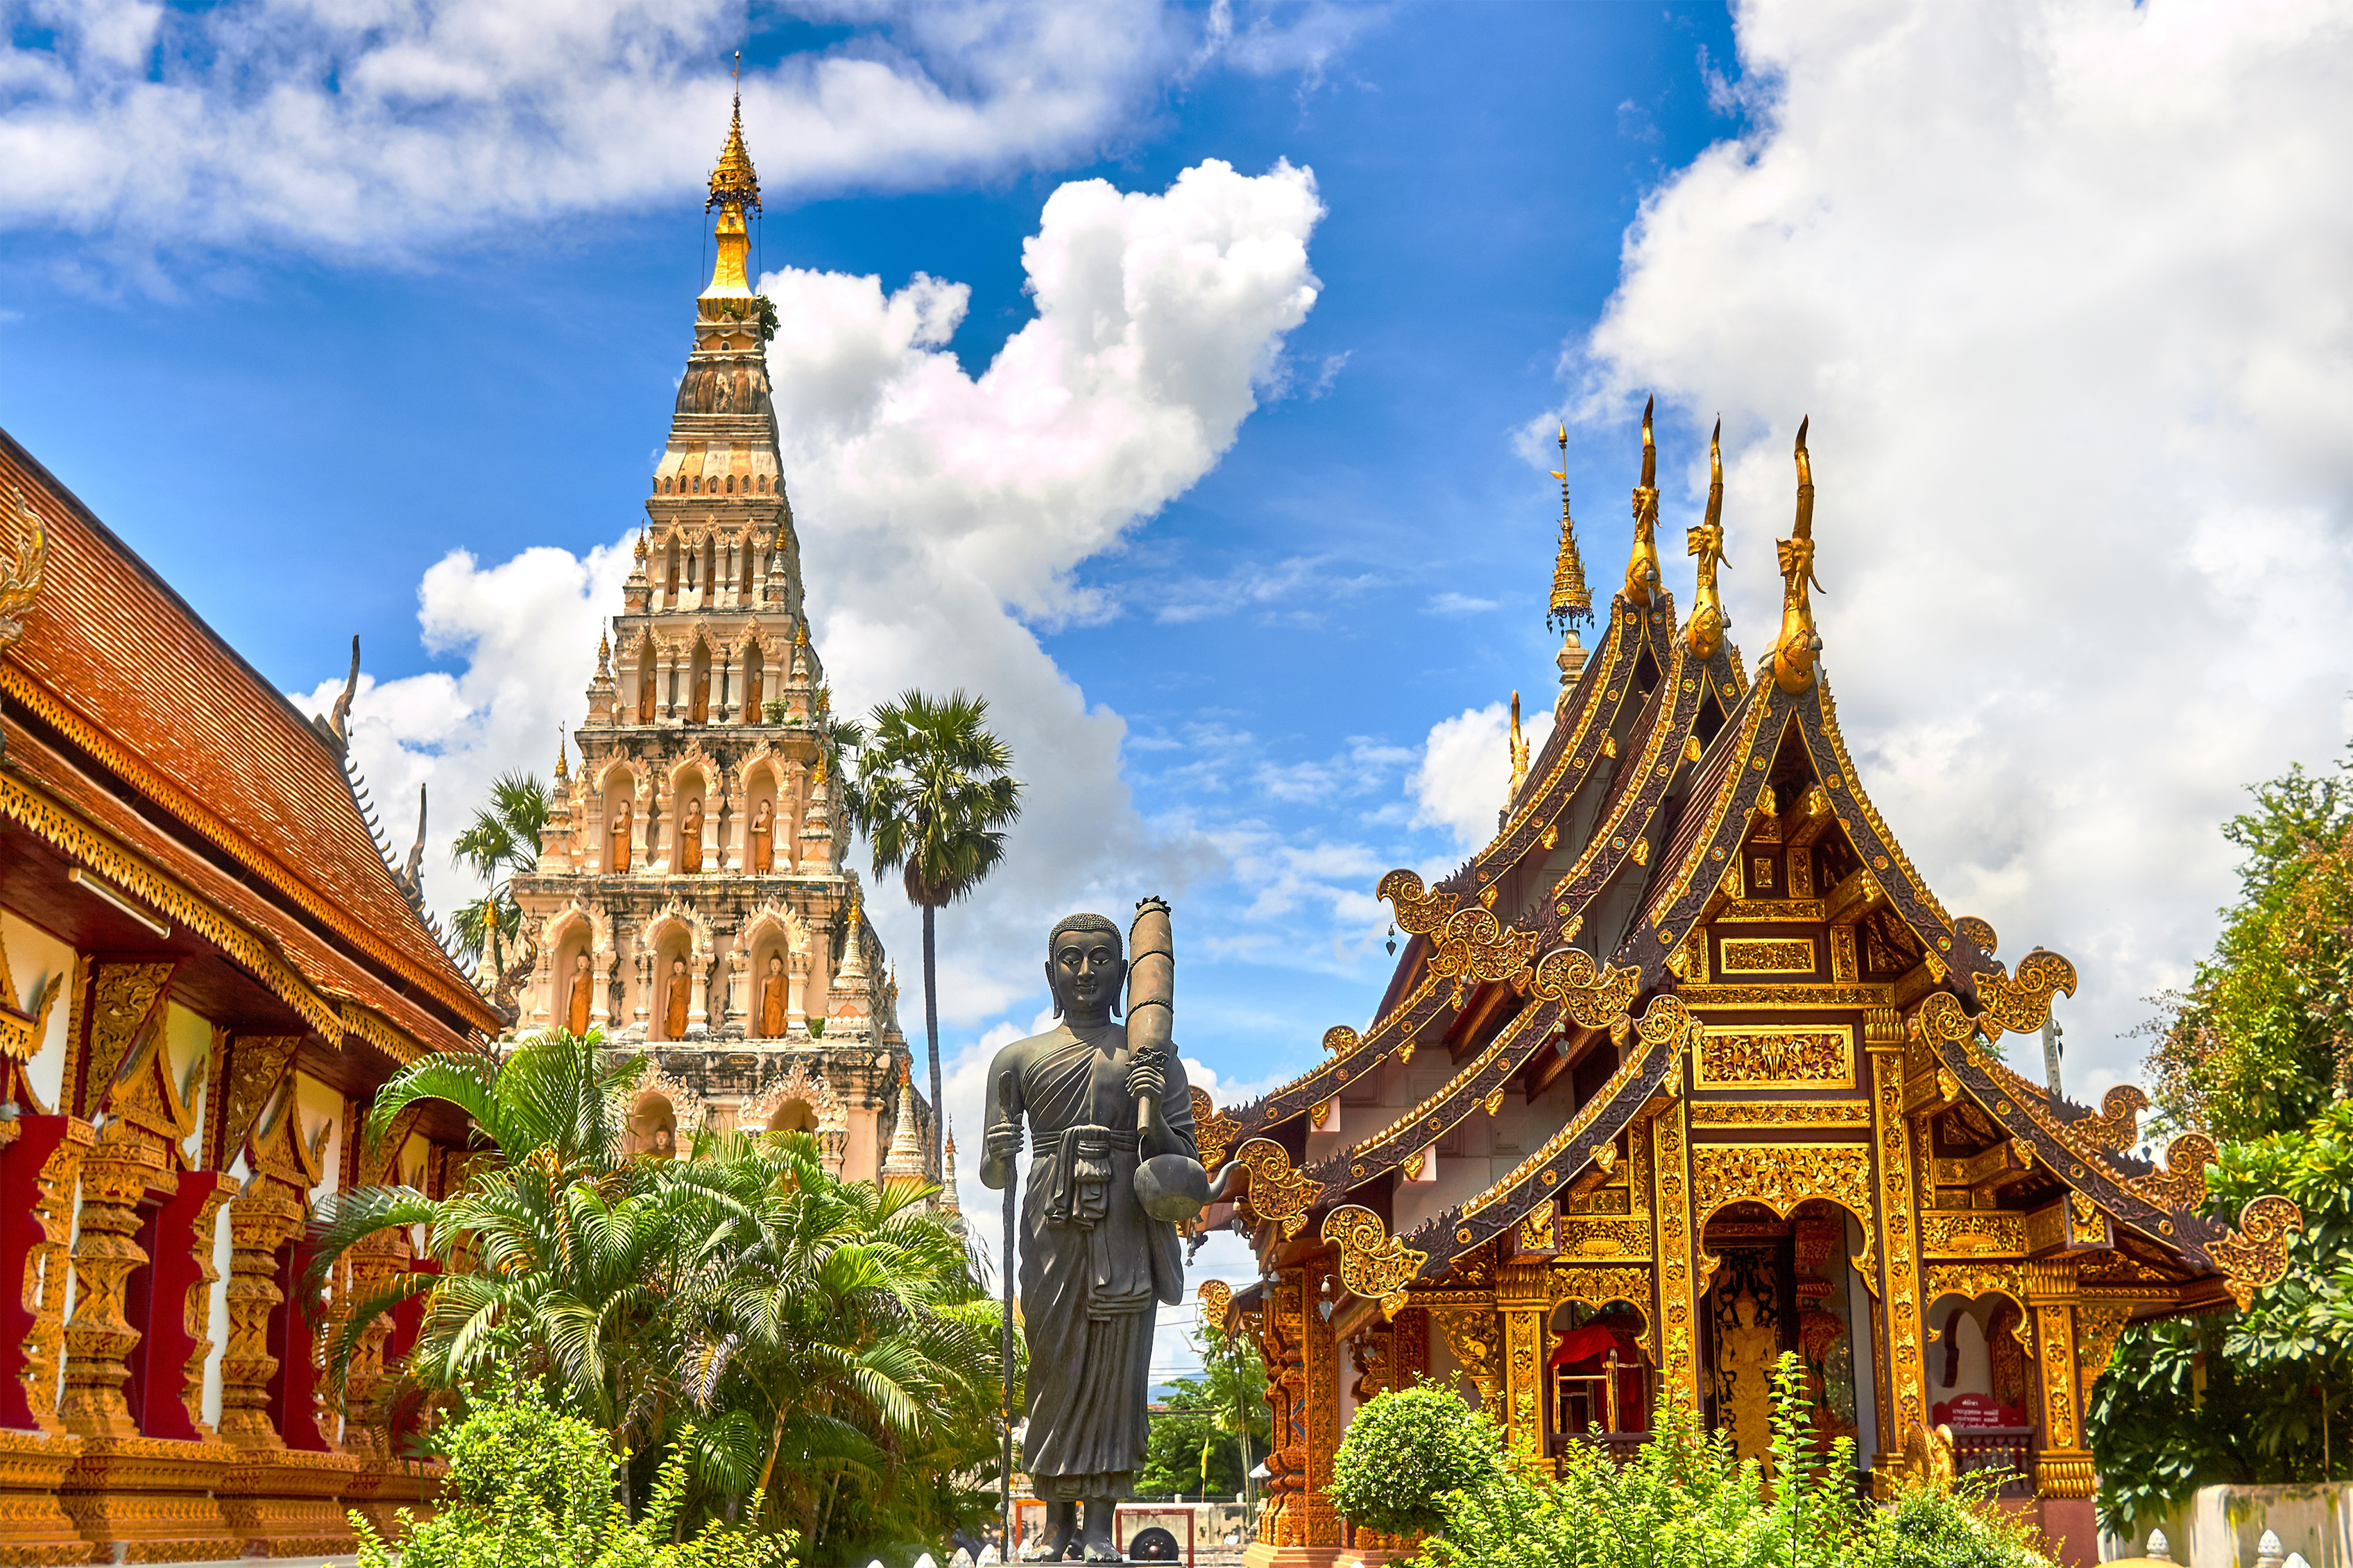 Tour du lịch Bangkok của Sunvina Travel 2022/2023 113274